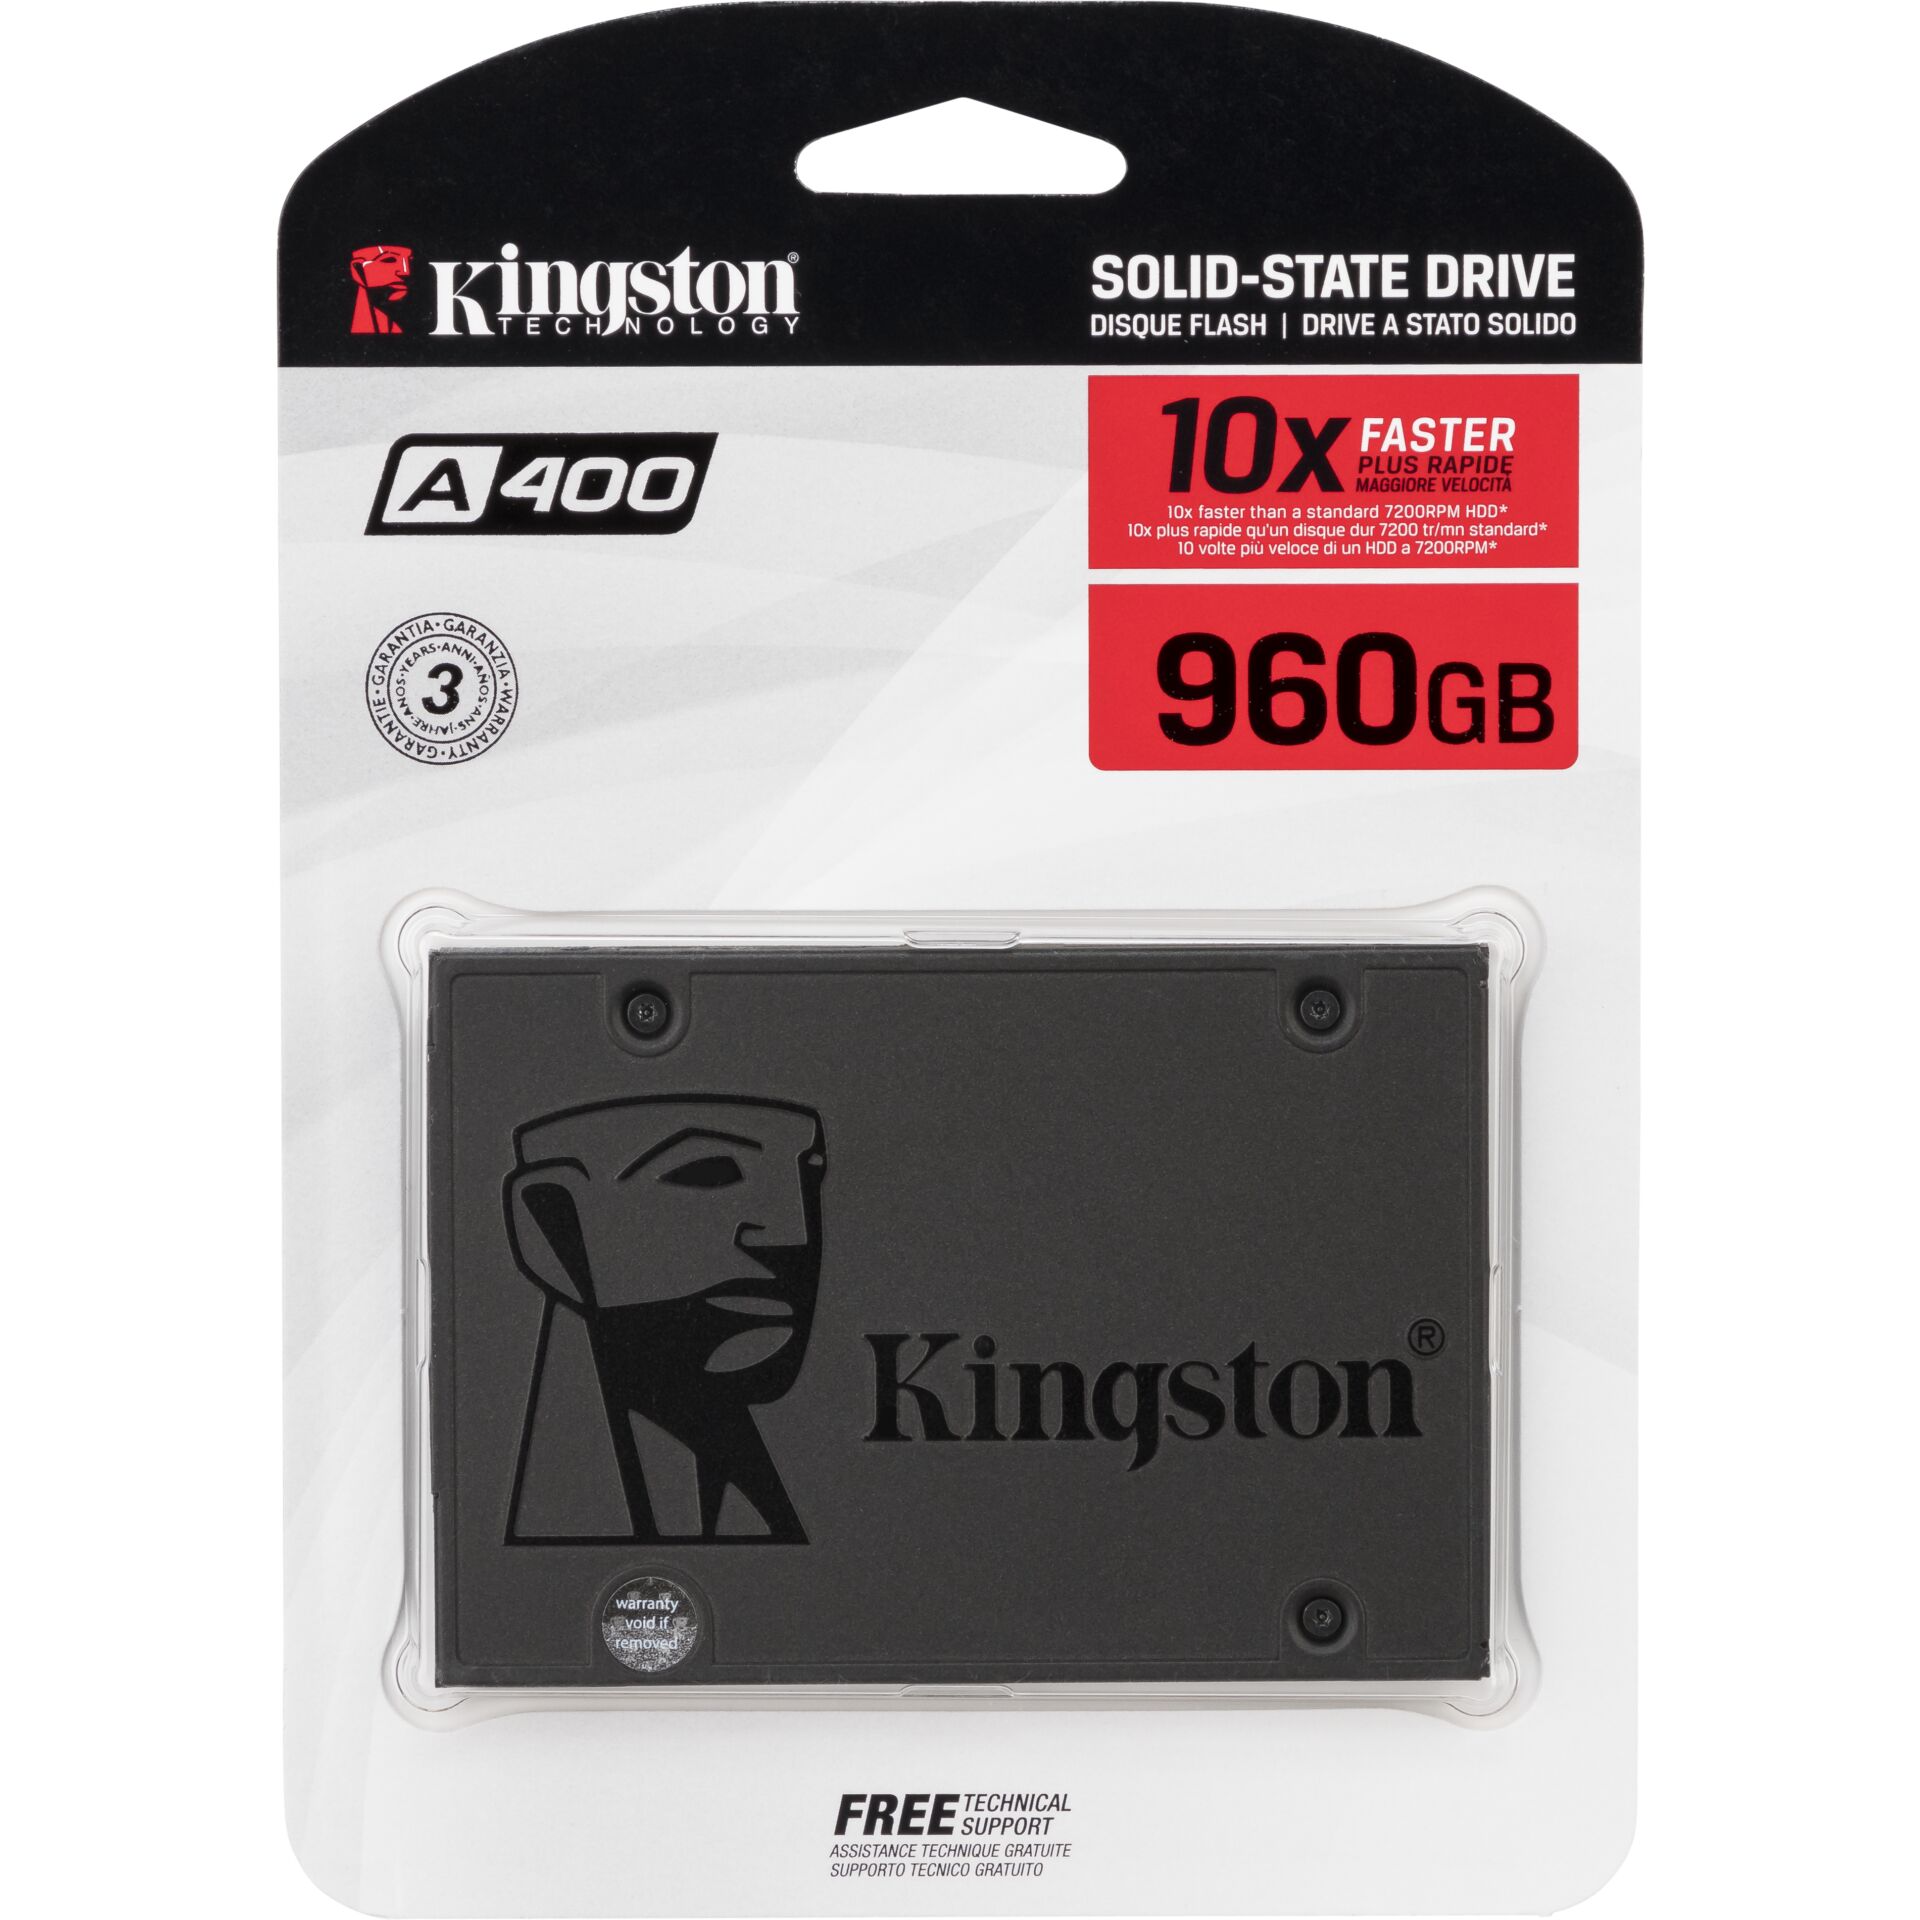 Kingston SSD A400 960GB 2.5' SATA-600